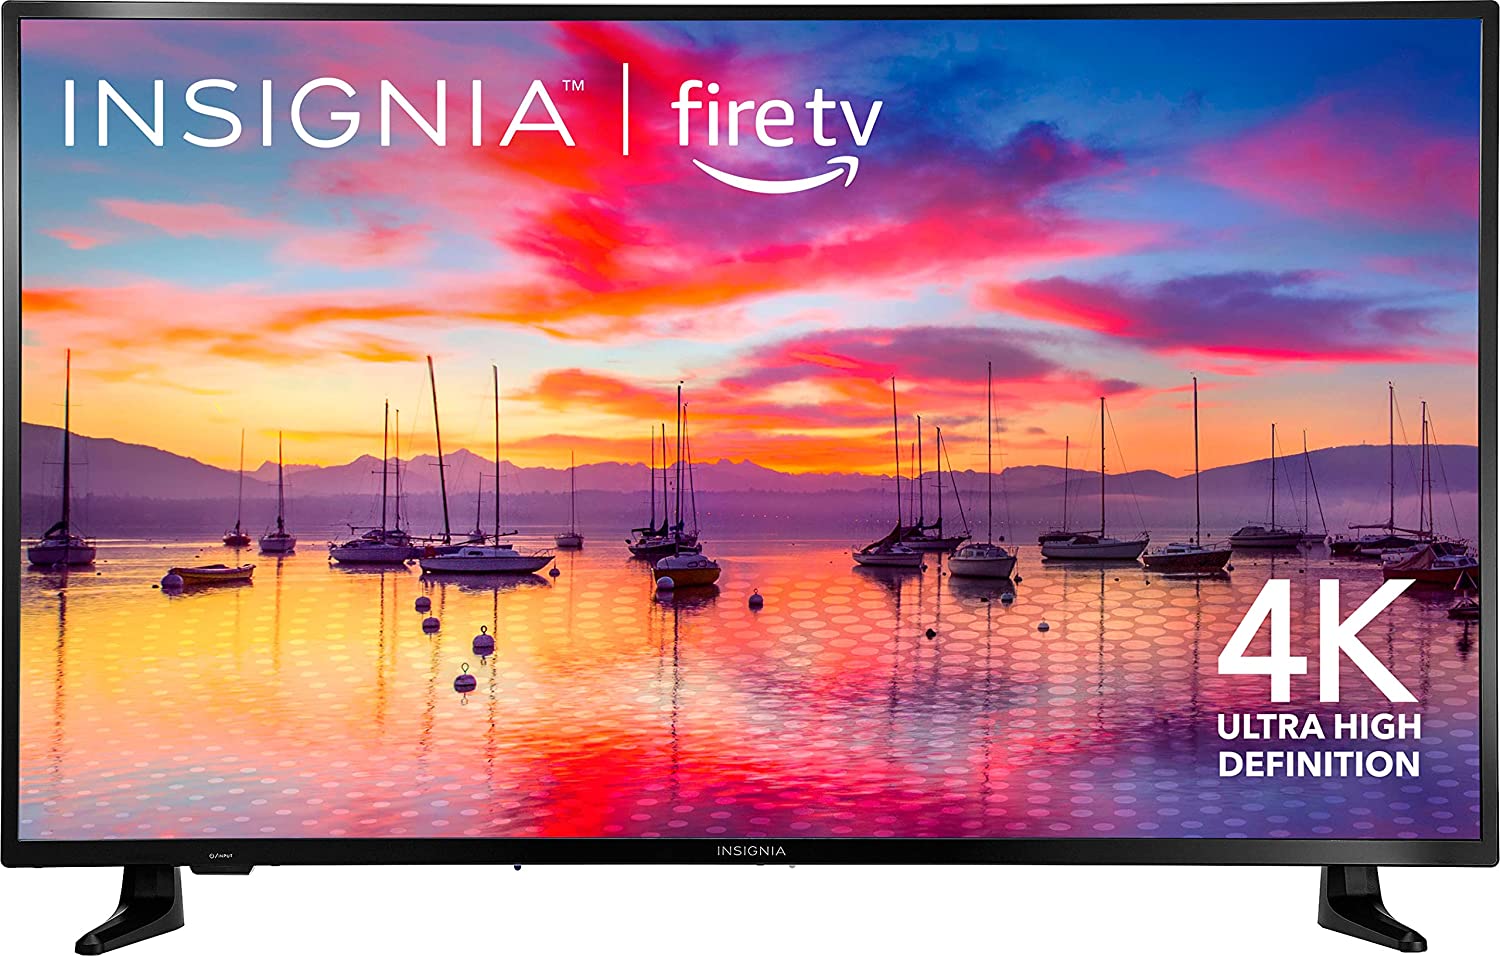 Image of INSIGNIA Fire TV Smart TV.